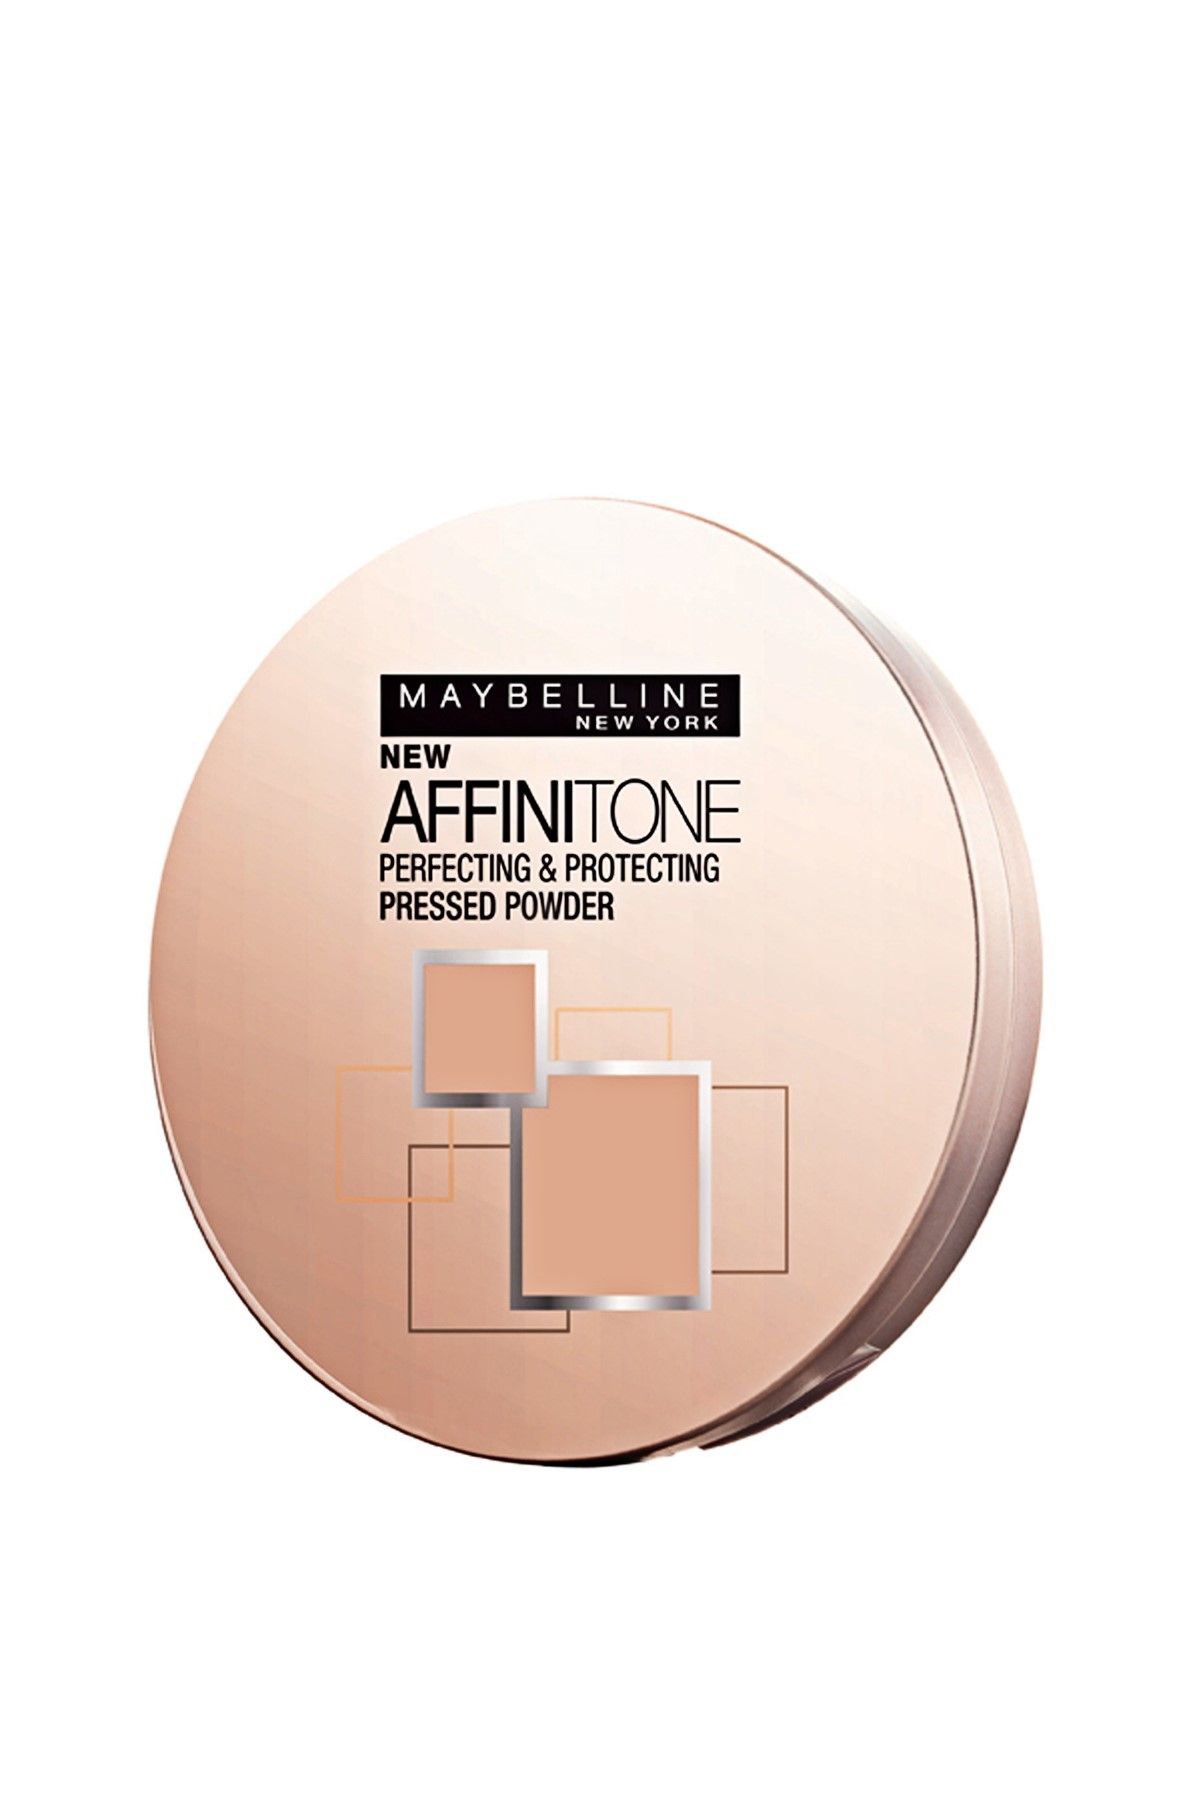 Maybelline New York پنکک و پودر آرایشی Affinitone Powder کاملا سبک و پوشش طبیعی شماره 21